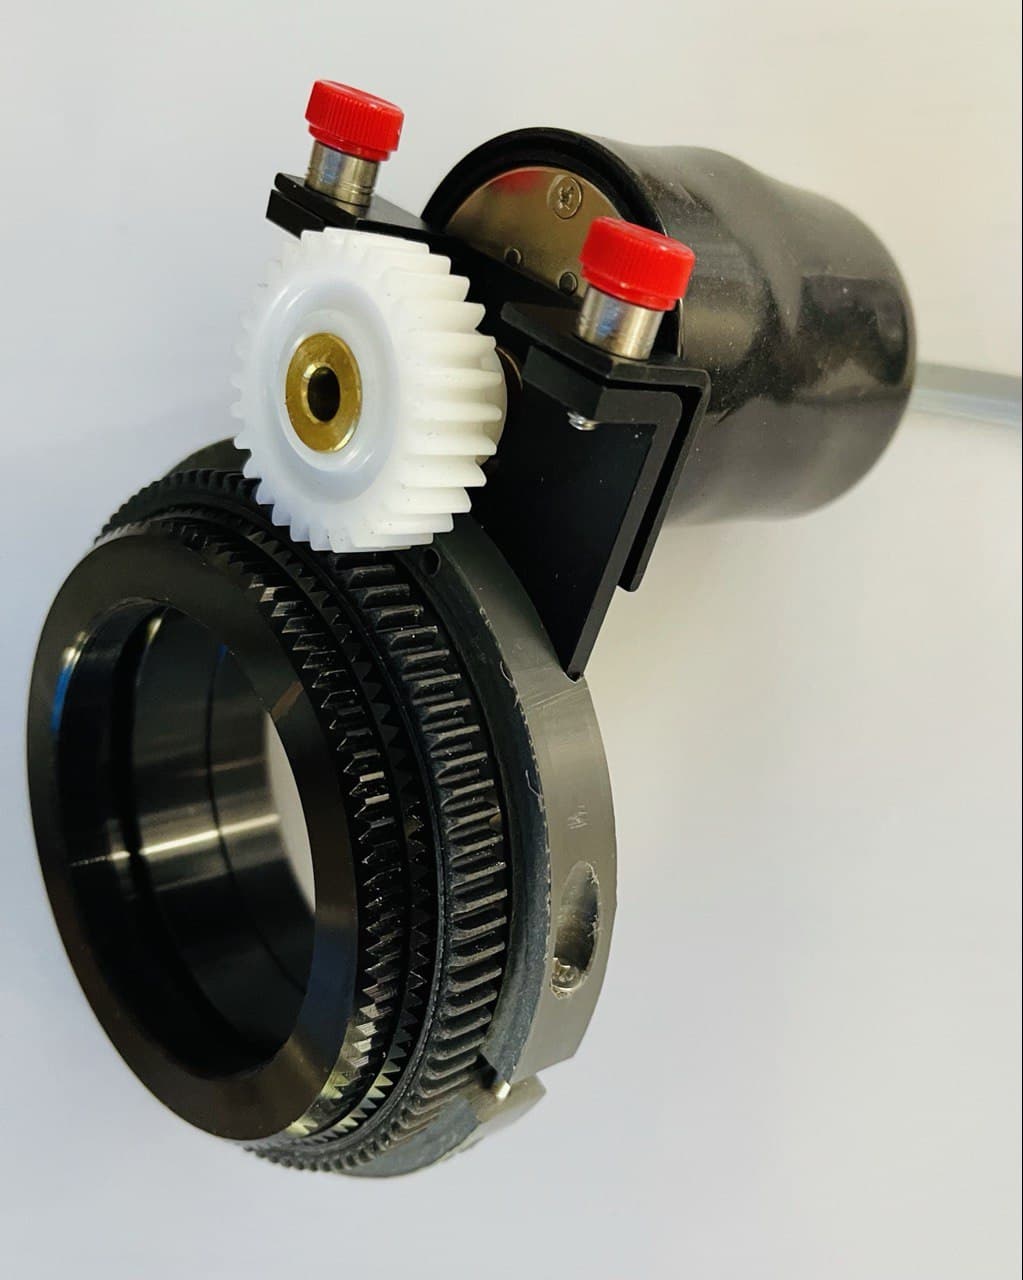 Rigel Systems usb-nFRAME single (camera rotator)